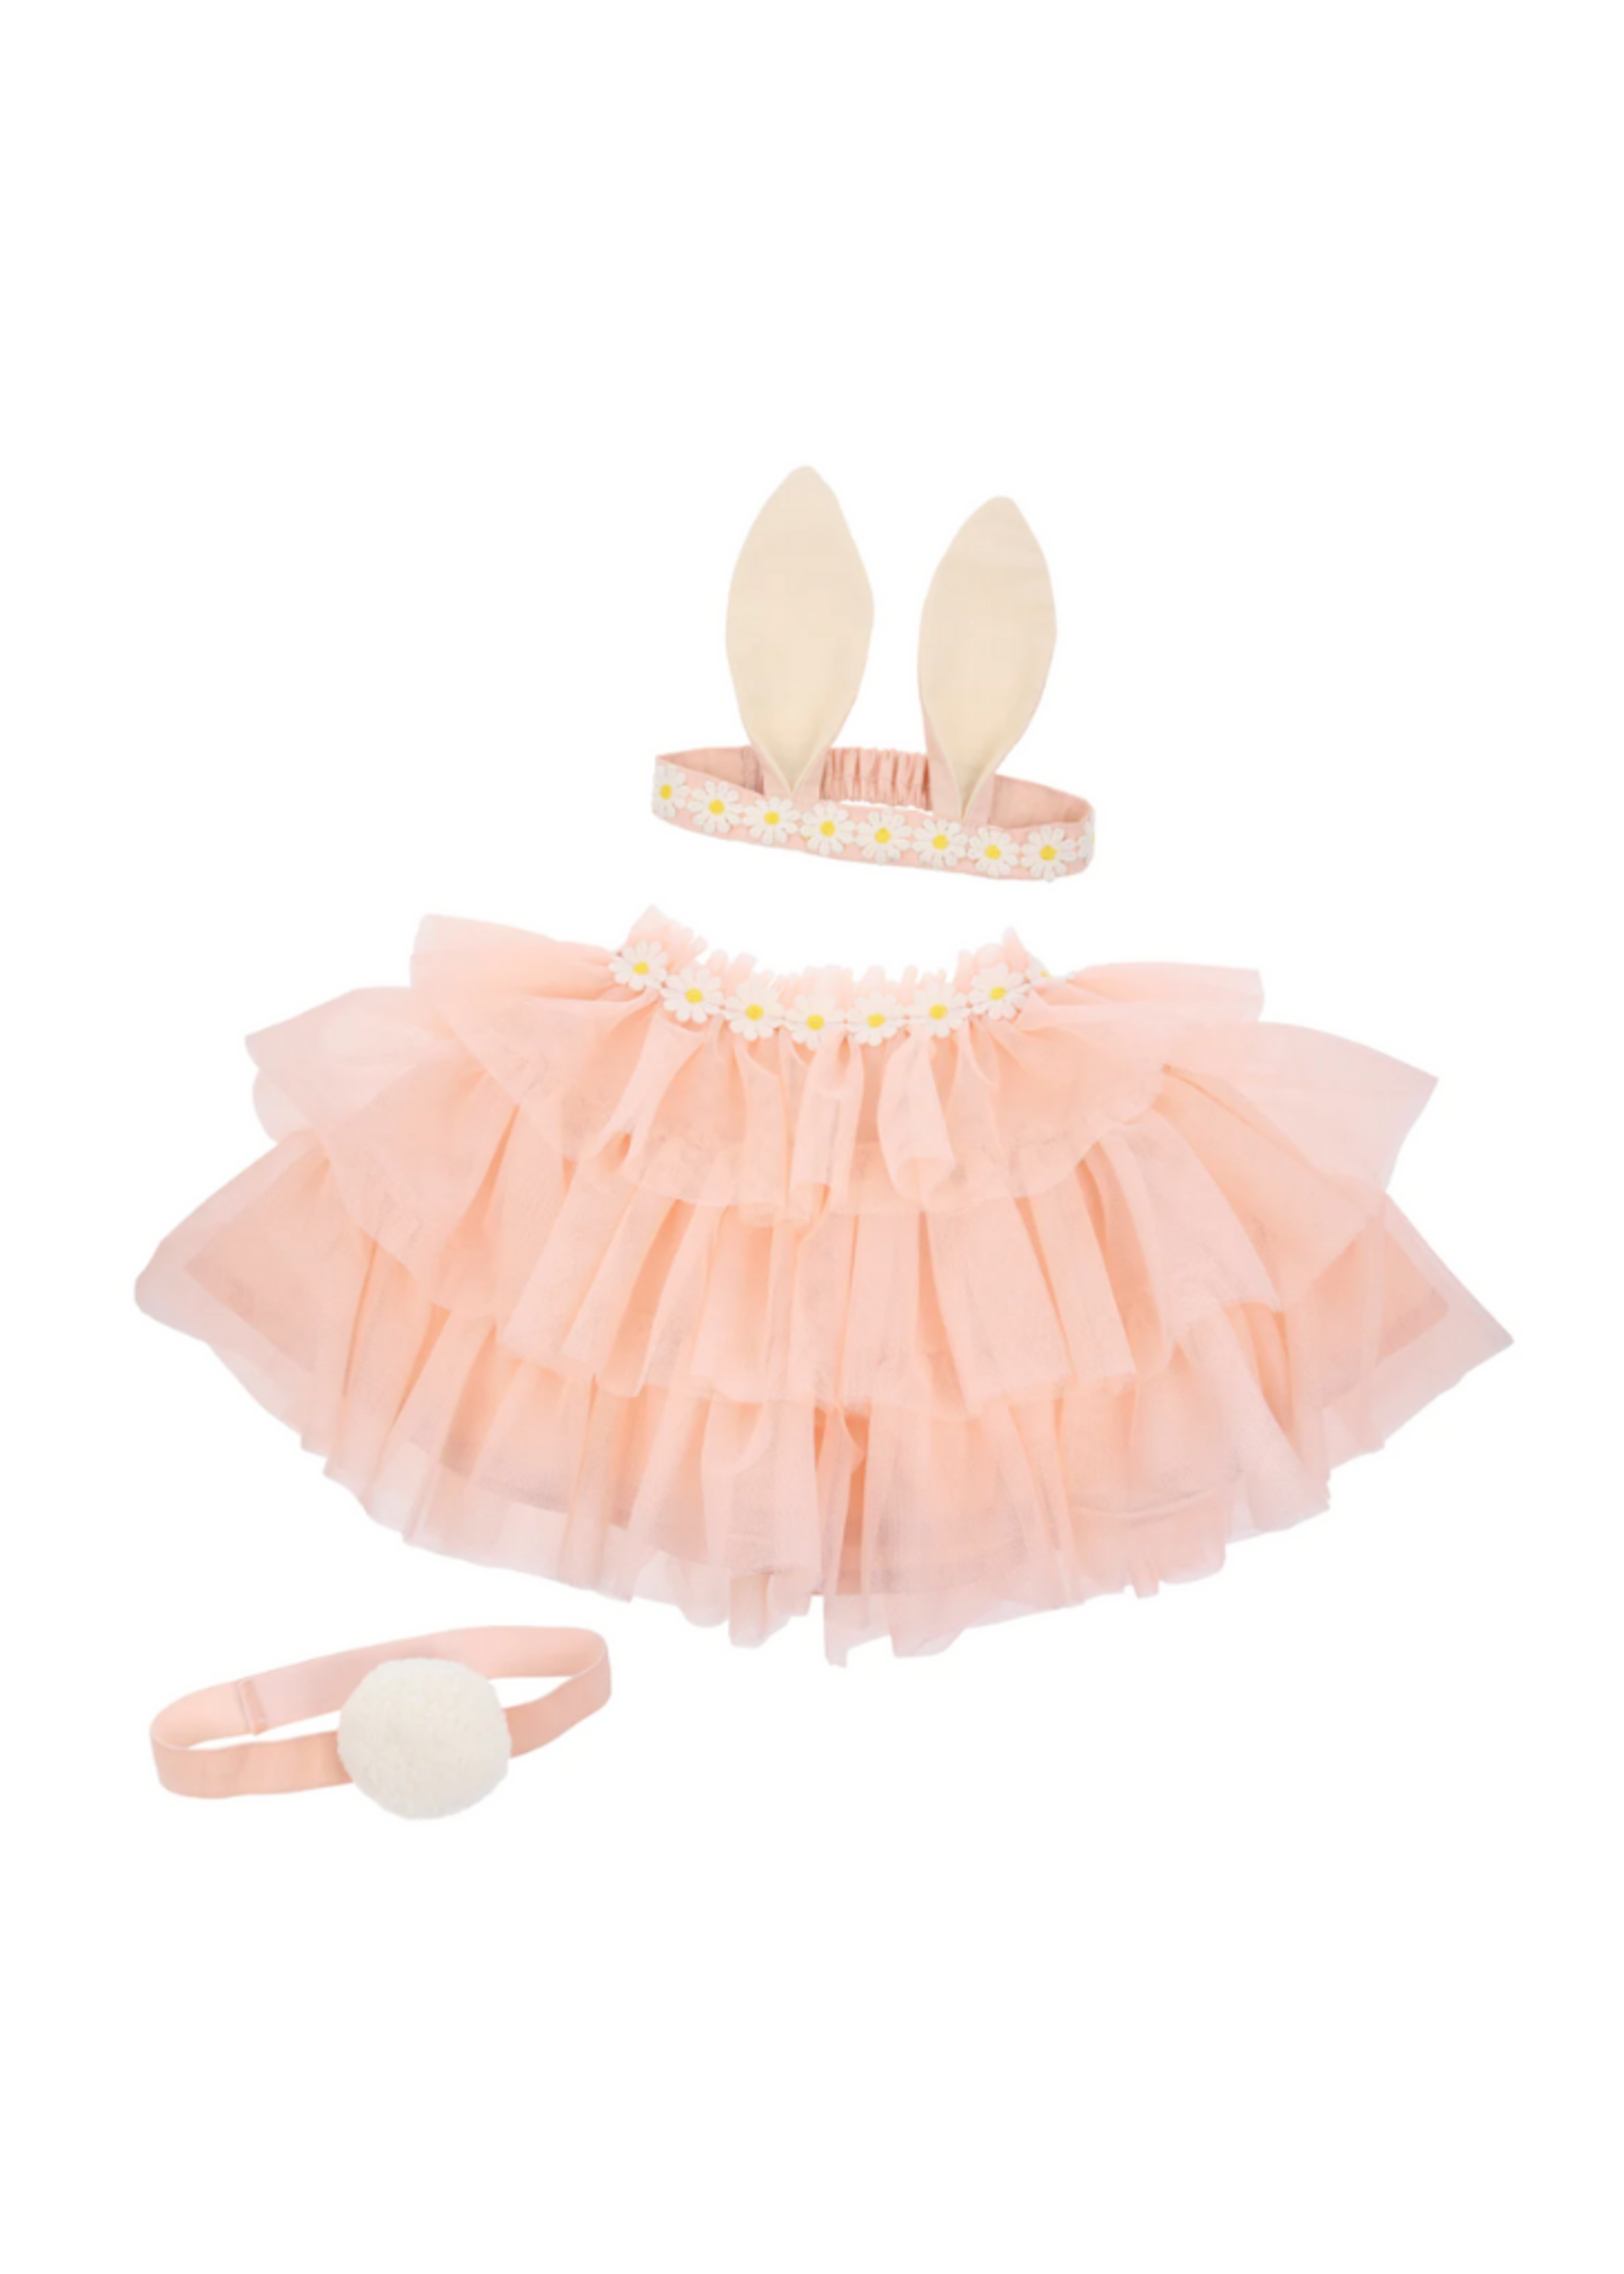 Meri Meri Peach Tulle Bunny Costume (3-6 Years)